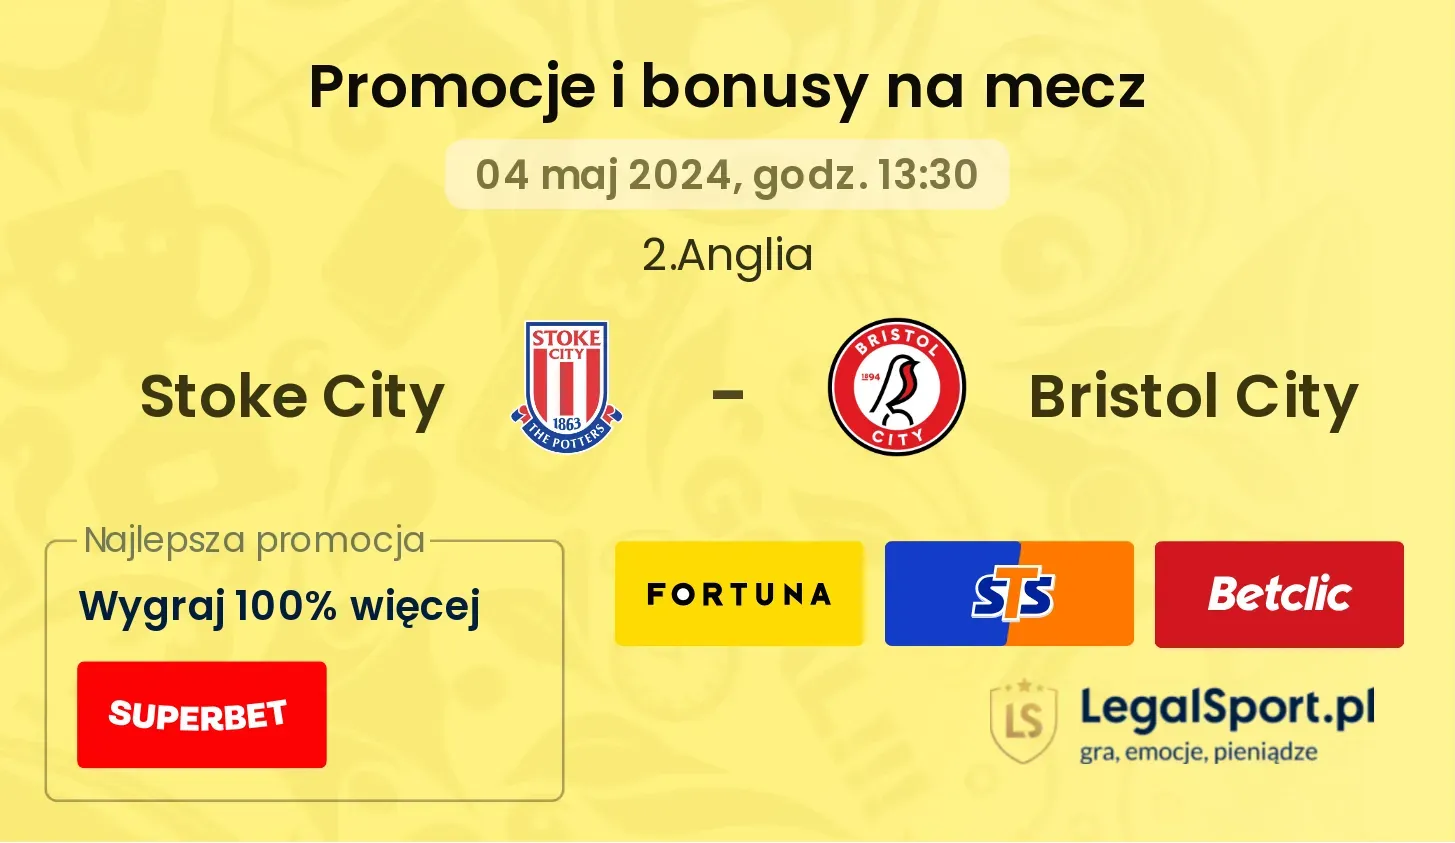 Stoke City - Bristol City promocje bonusy na mecz